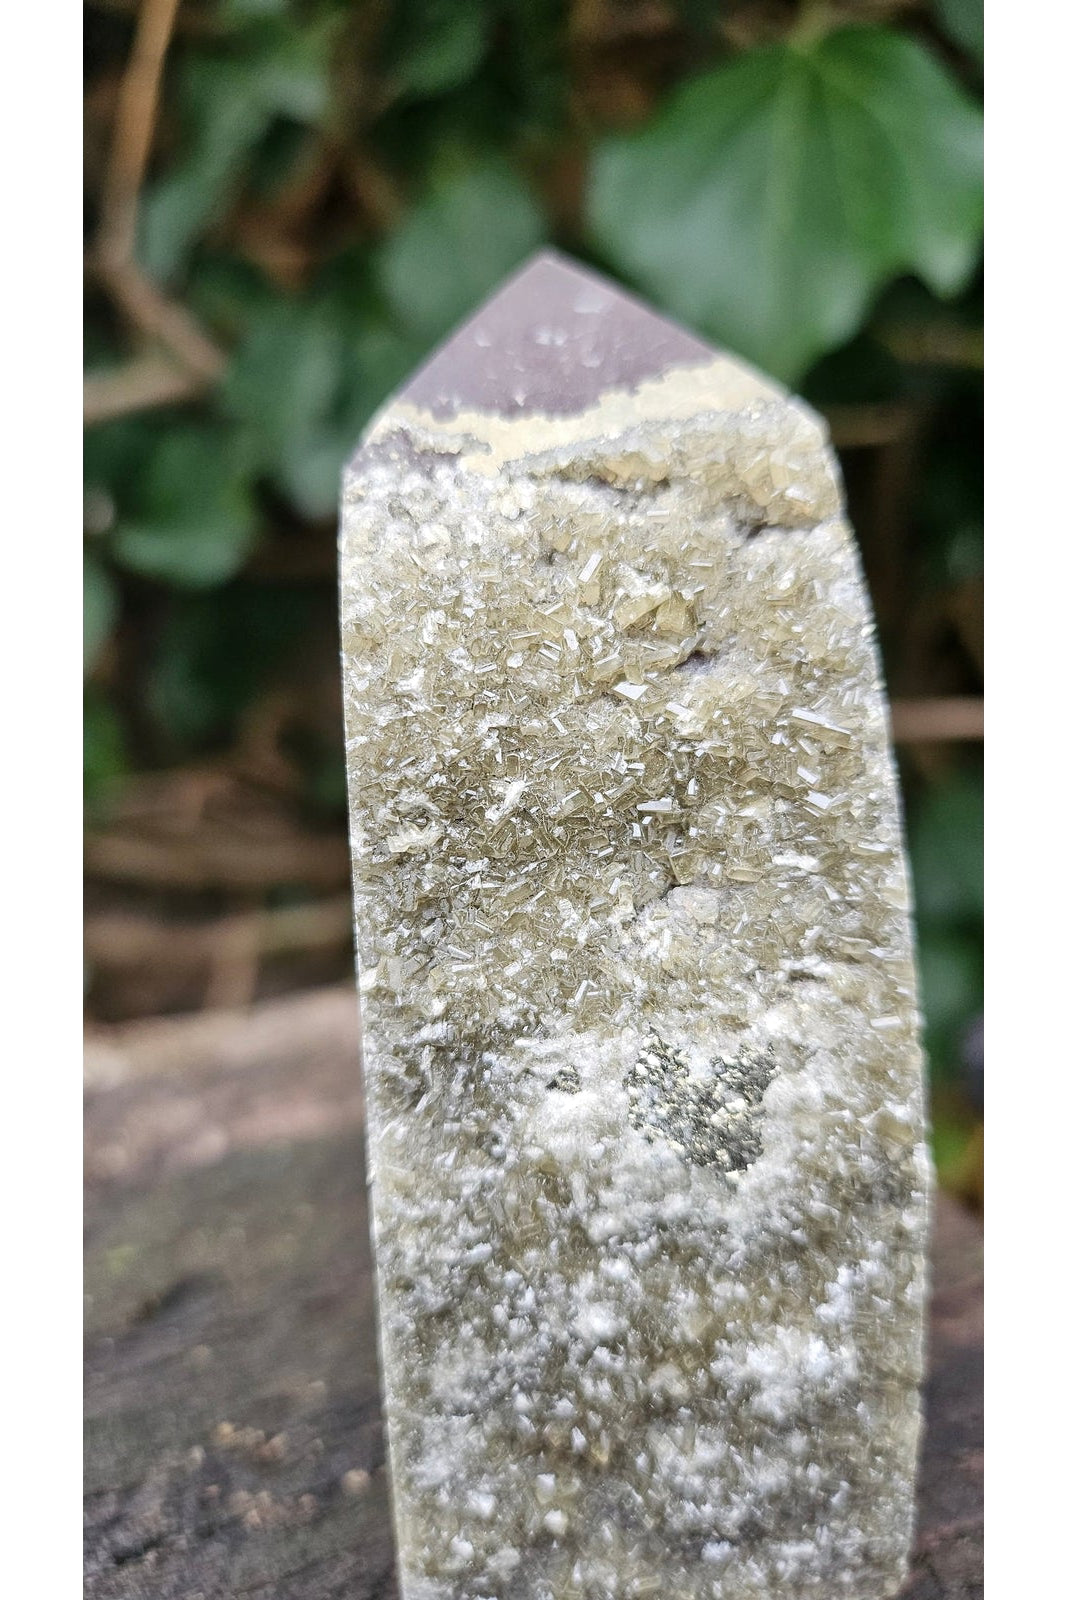 Raw Amethyst Quartz Obelisk - Natural Elegance and Purifying Energy